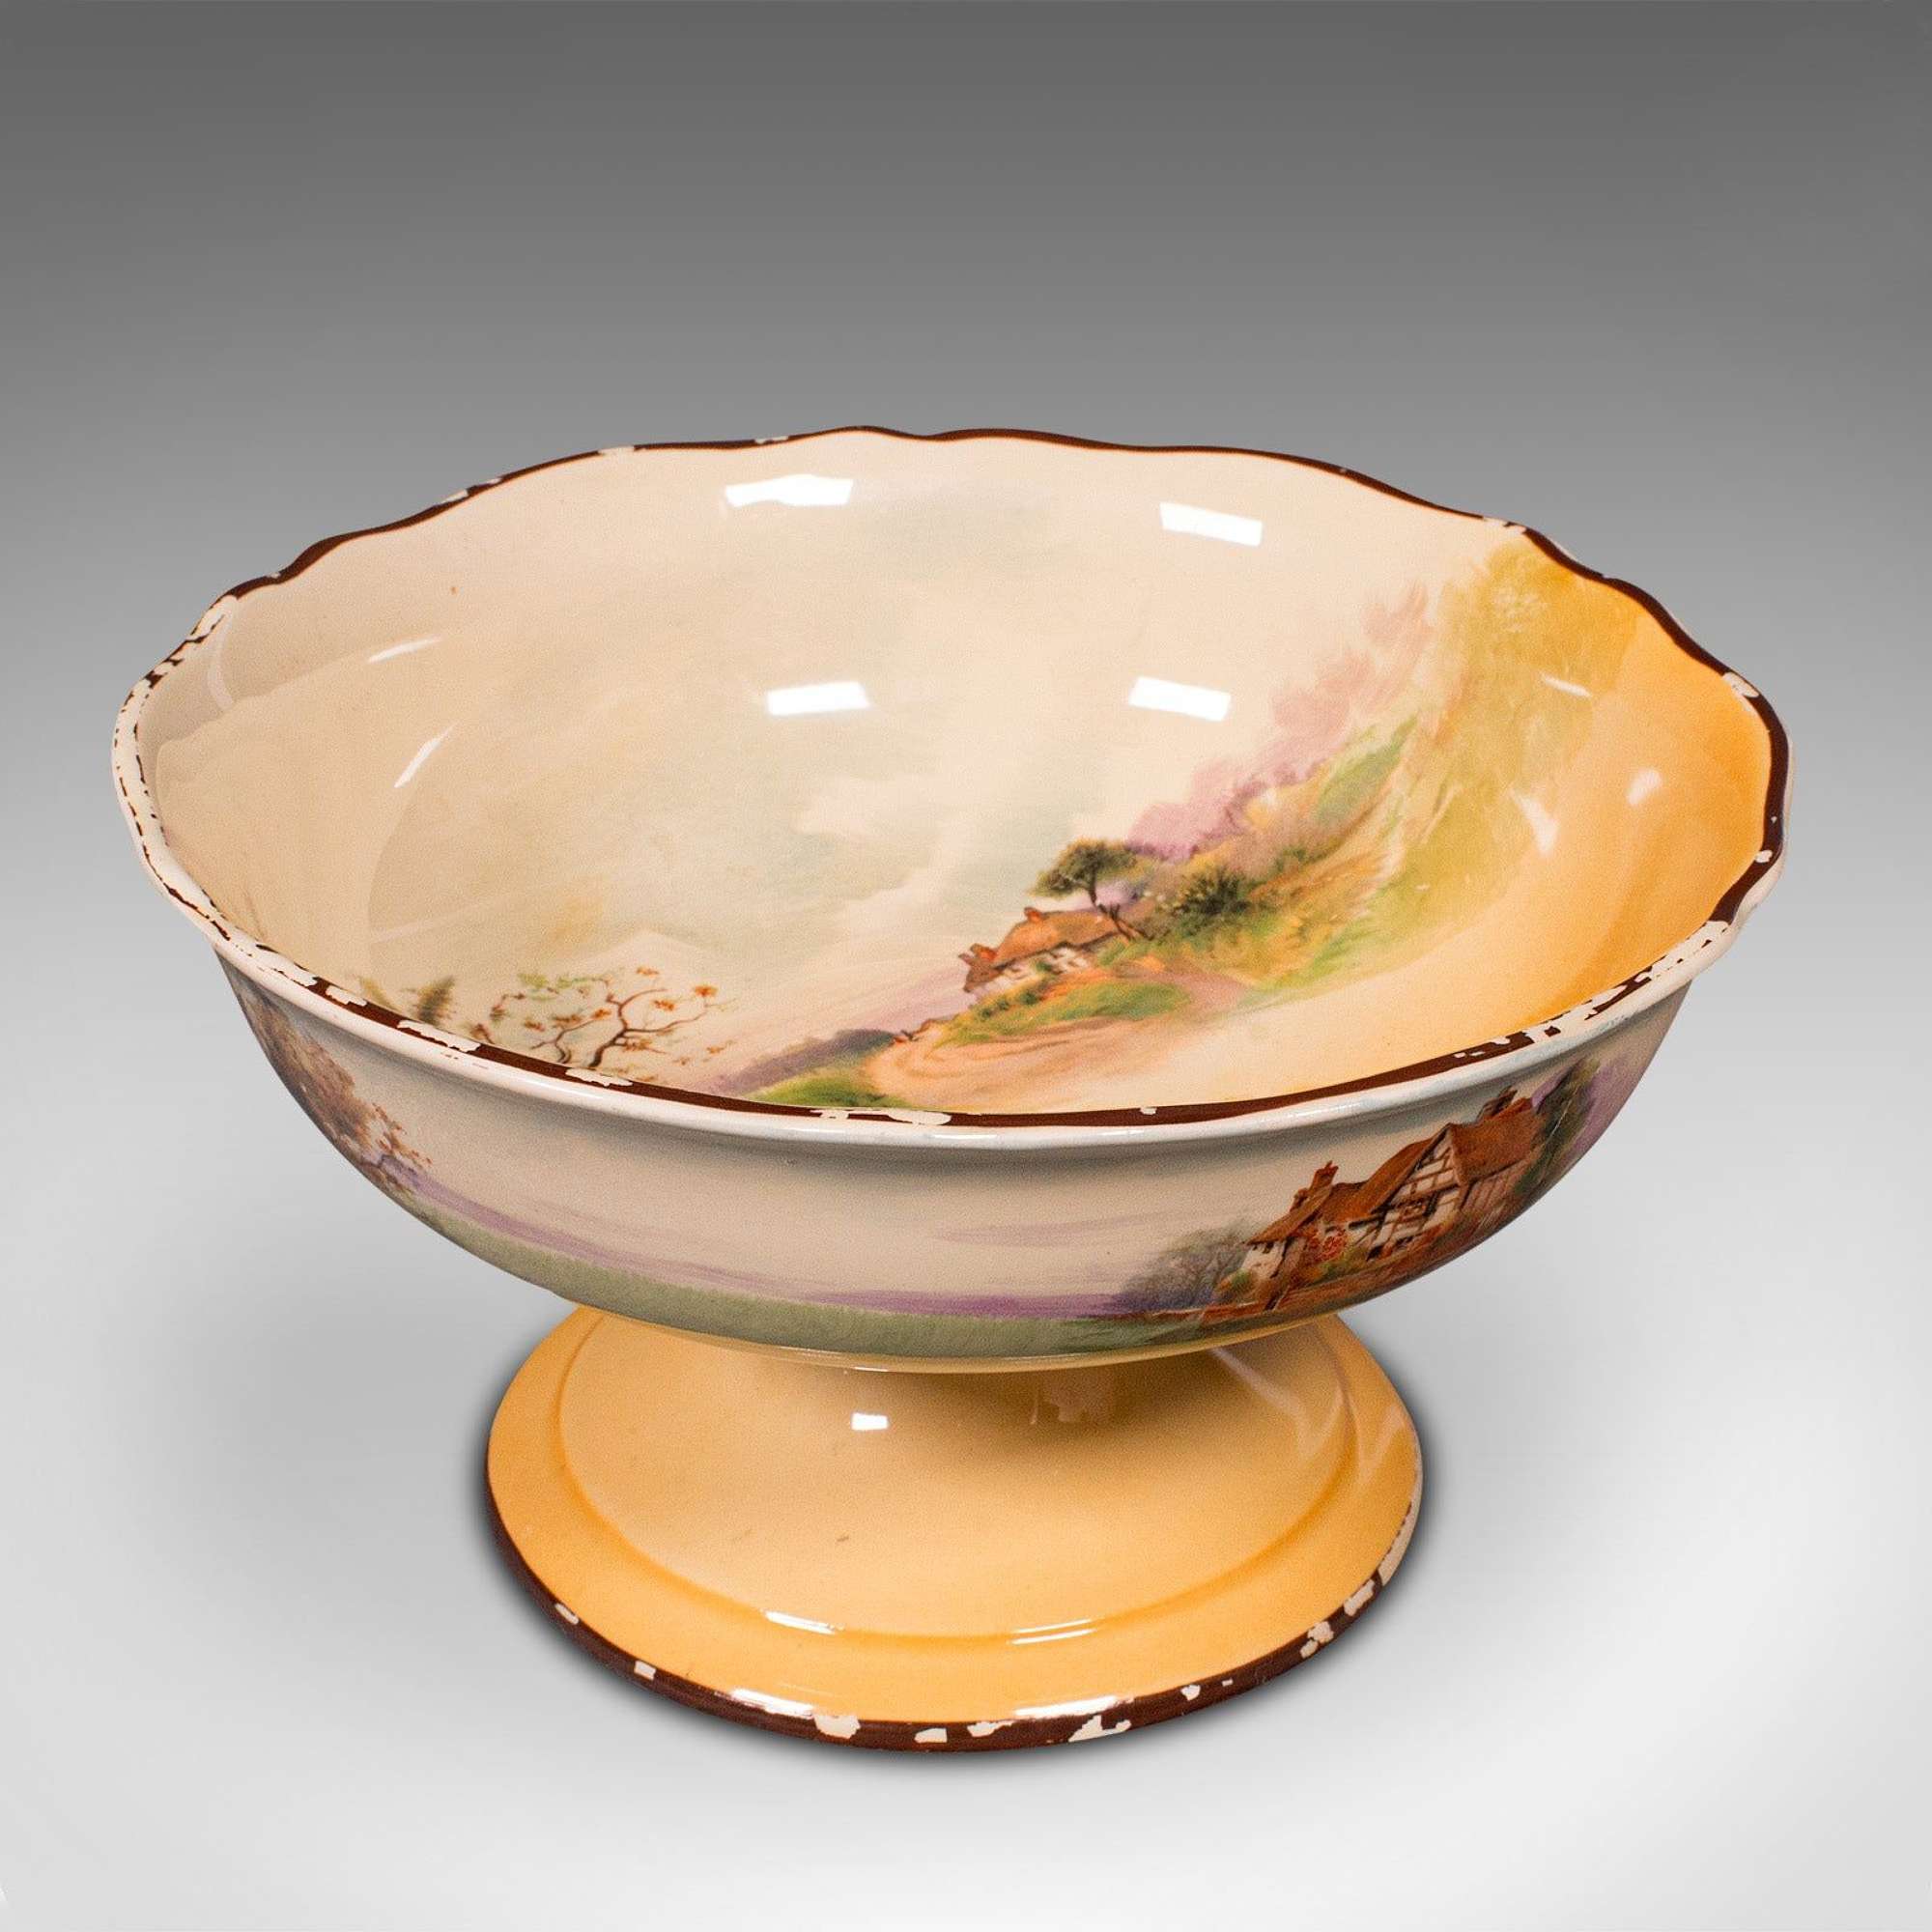 Vintage Decorative Footed Bowl, English, Ceramic, Serving Dish, Fruitbowl, 1930